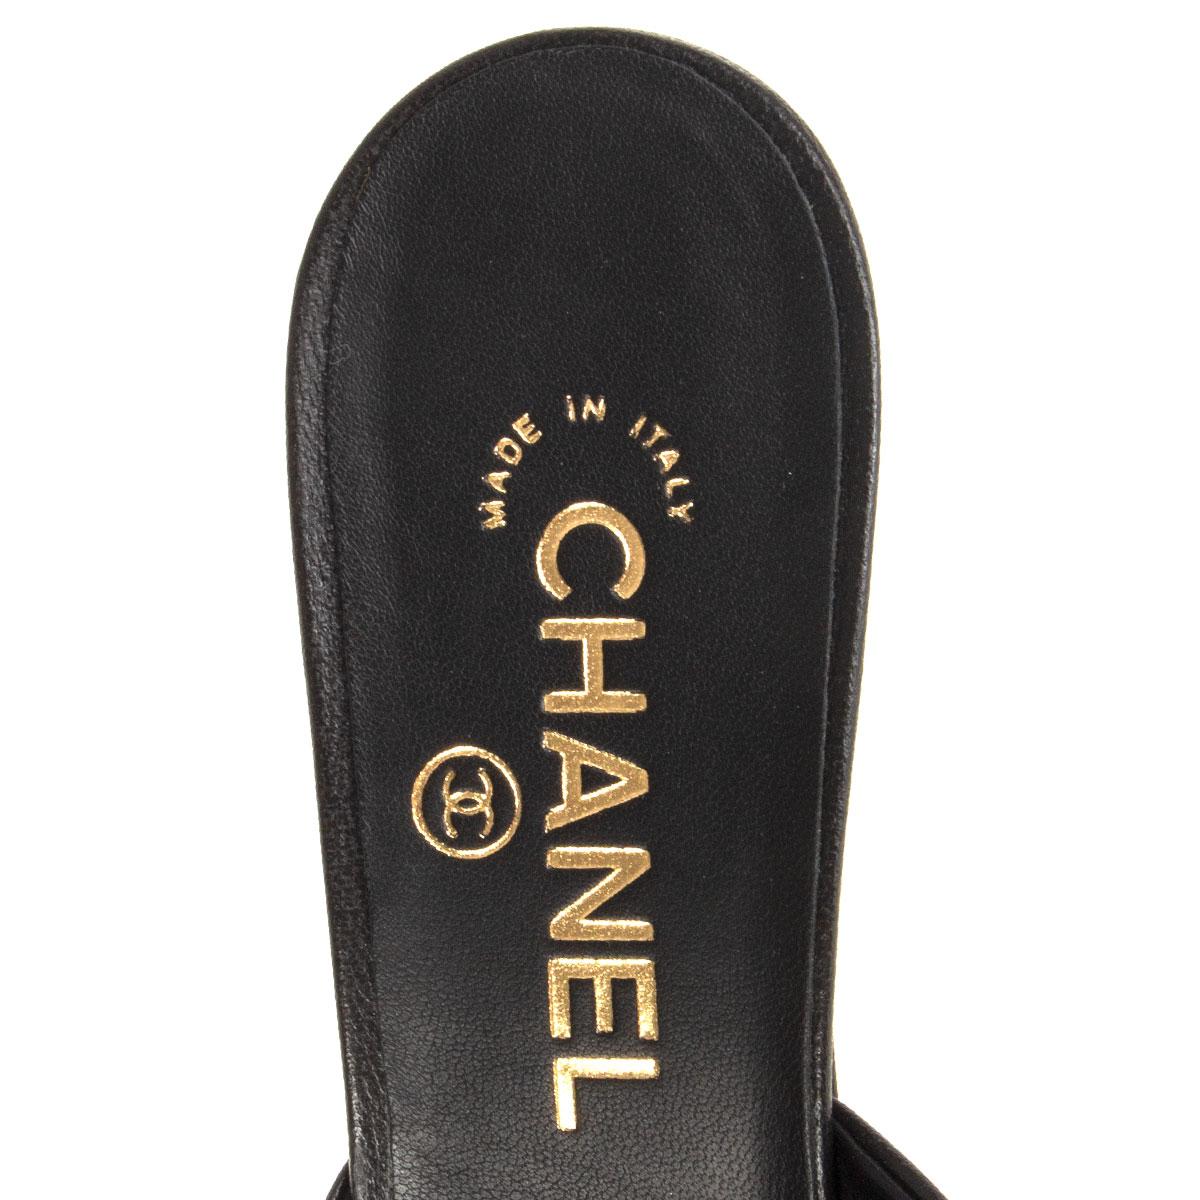 Black CHANEL black Pointed Toe PEARL KITTEn HEEL Mules Shoes 38.5